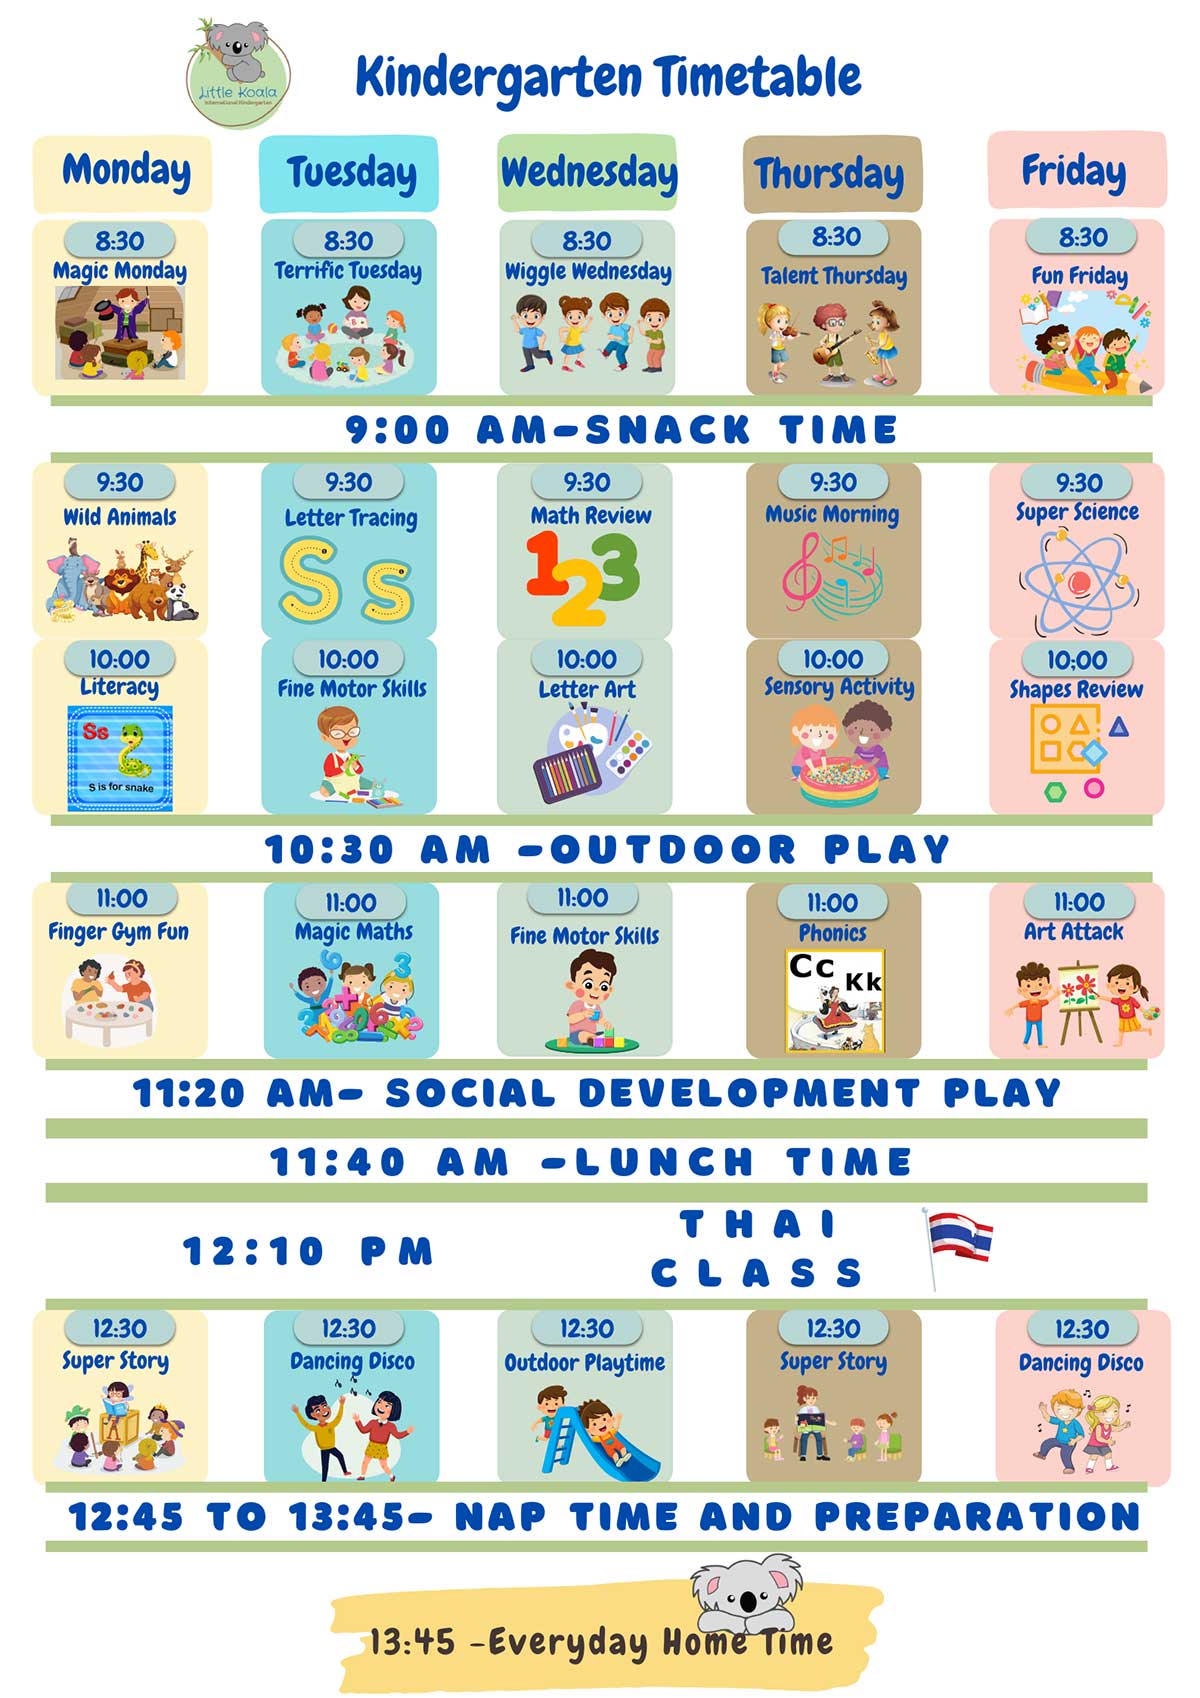 littlekoalaschool-kindergarten-timetable-01.jpg